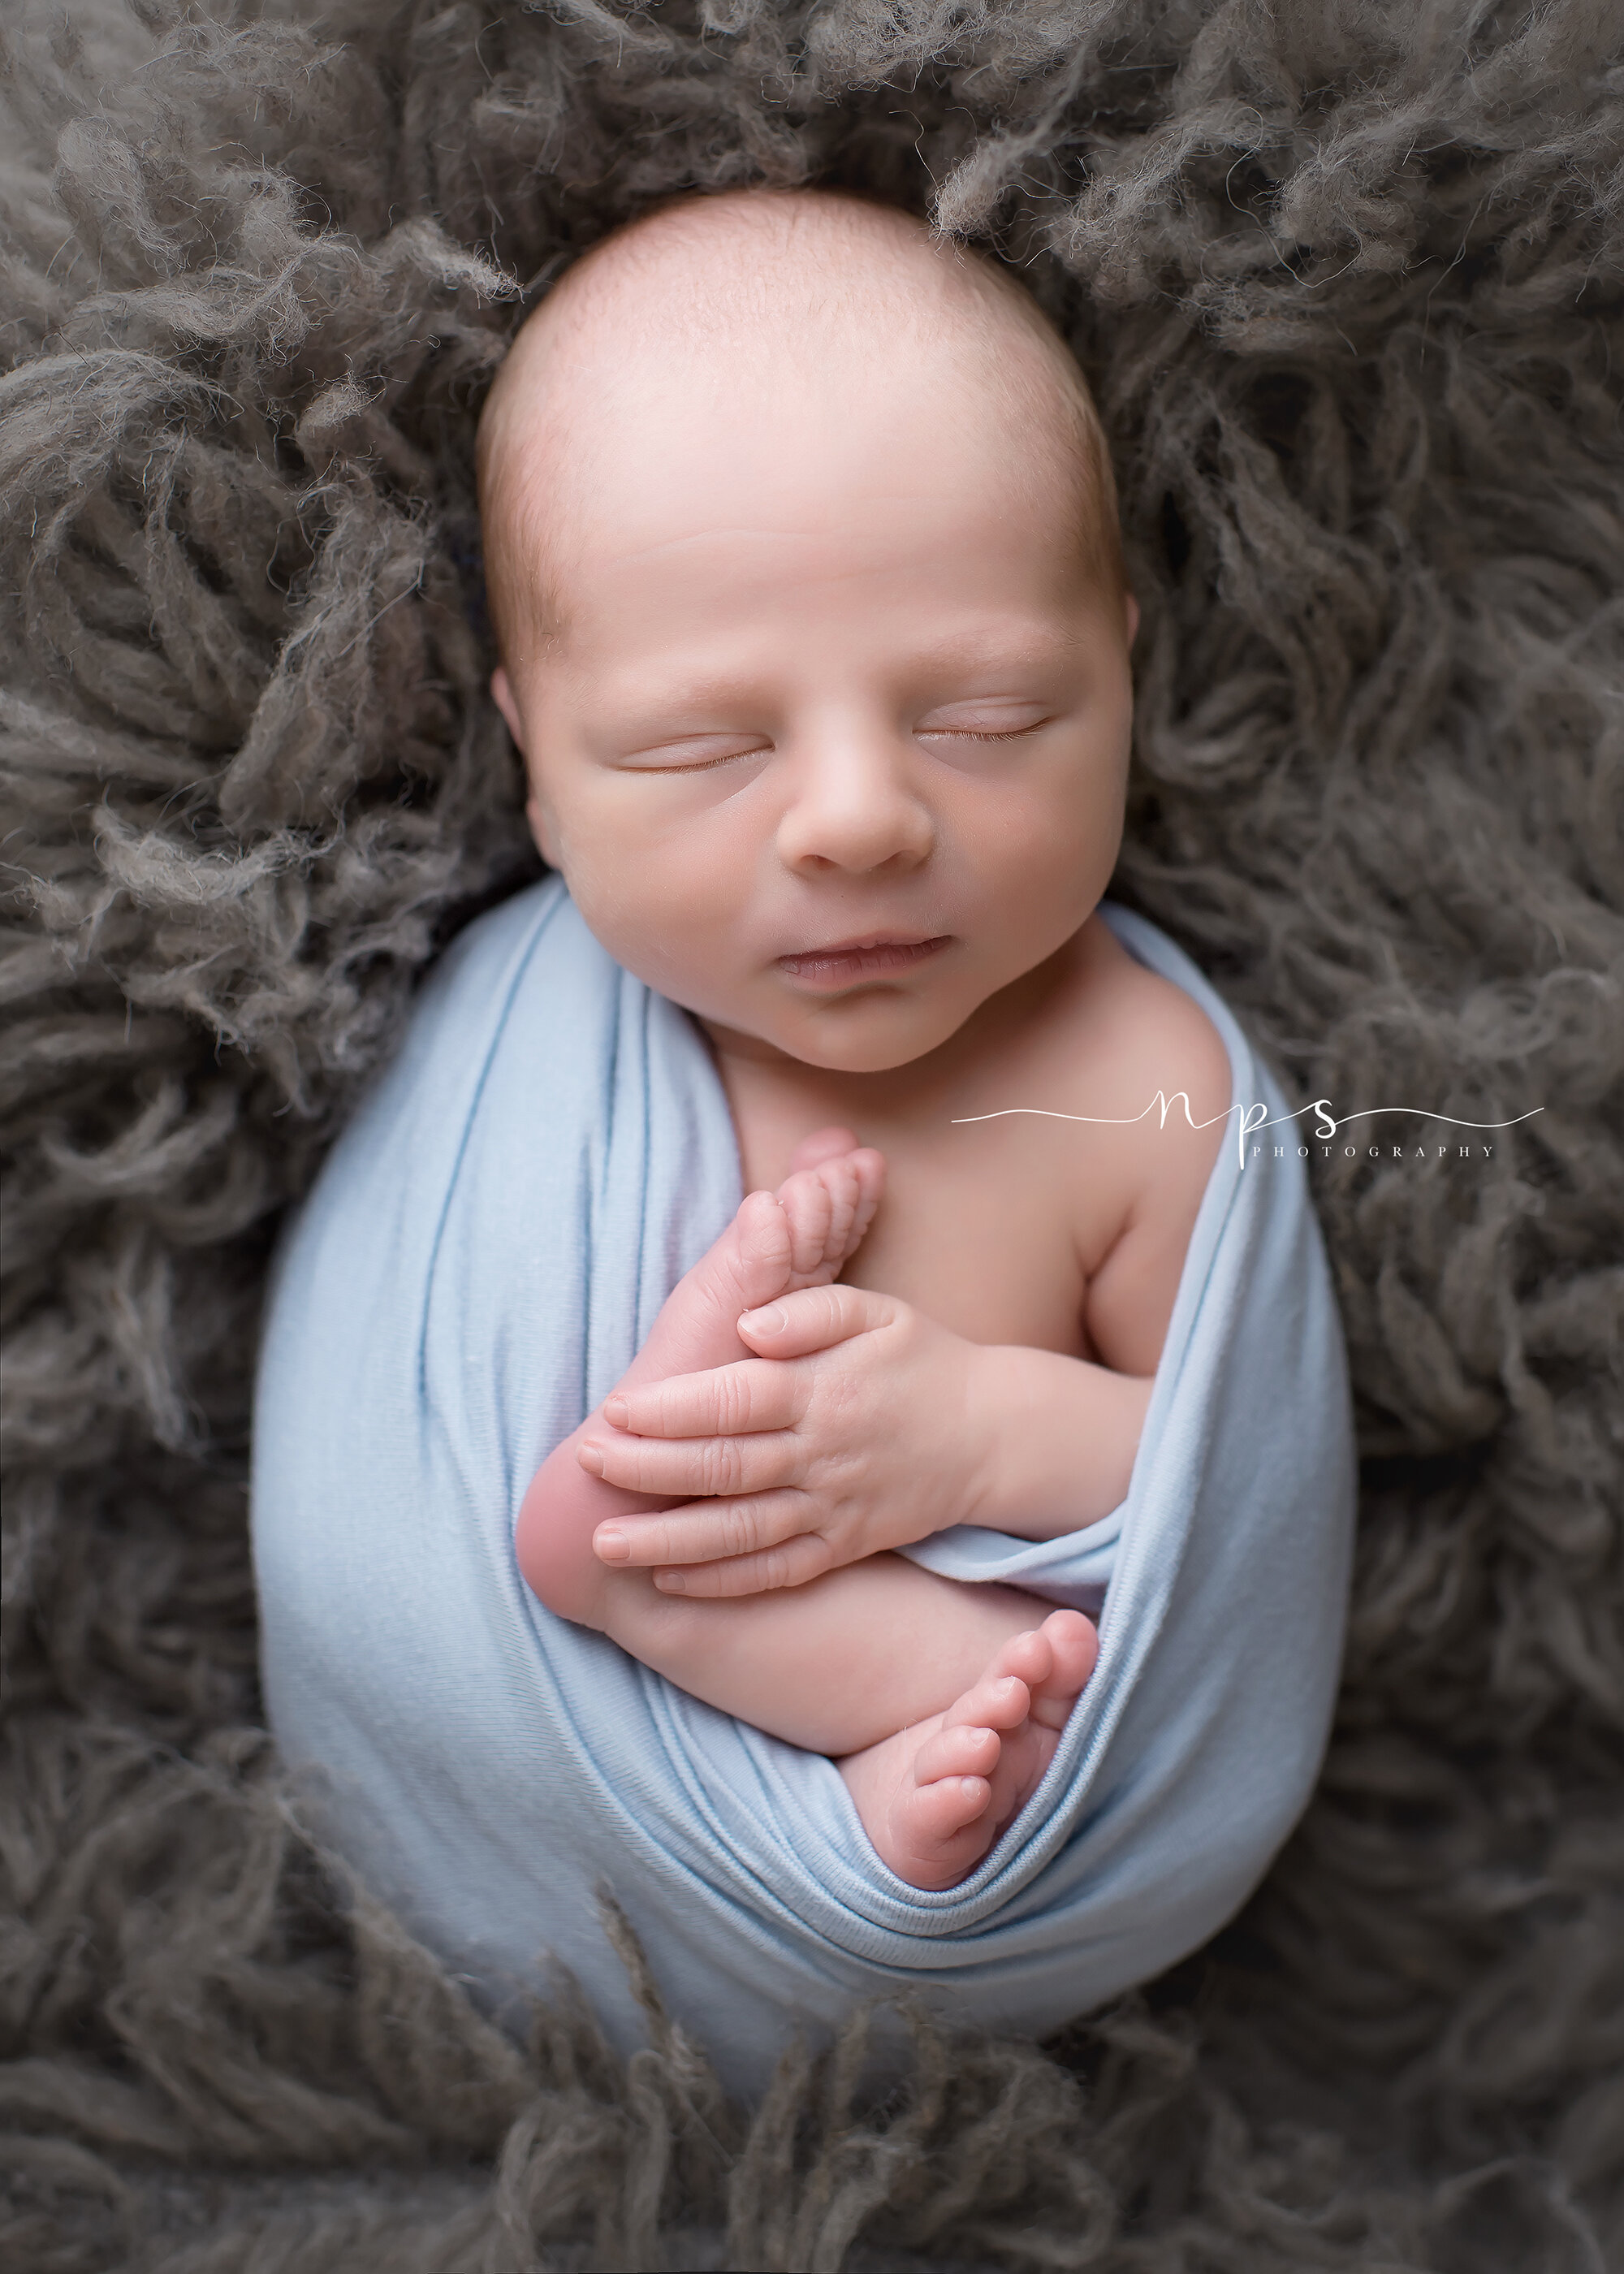 Baby Photographer Pinehurst 5 - NPS Photography